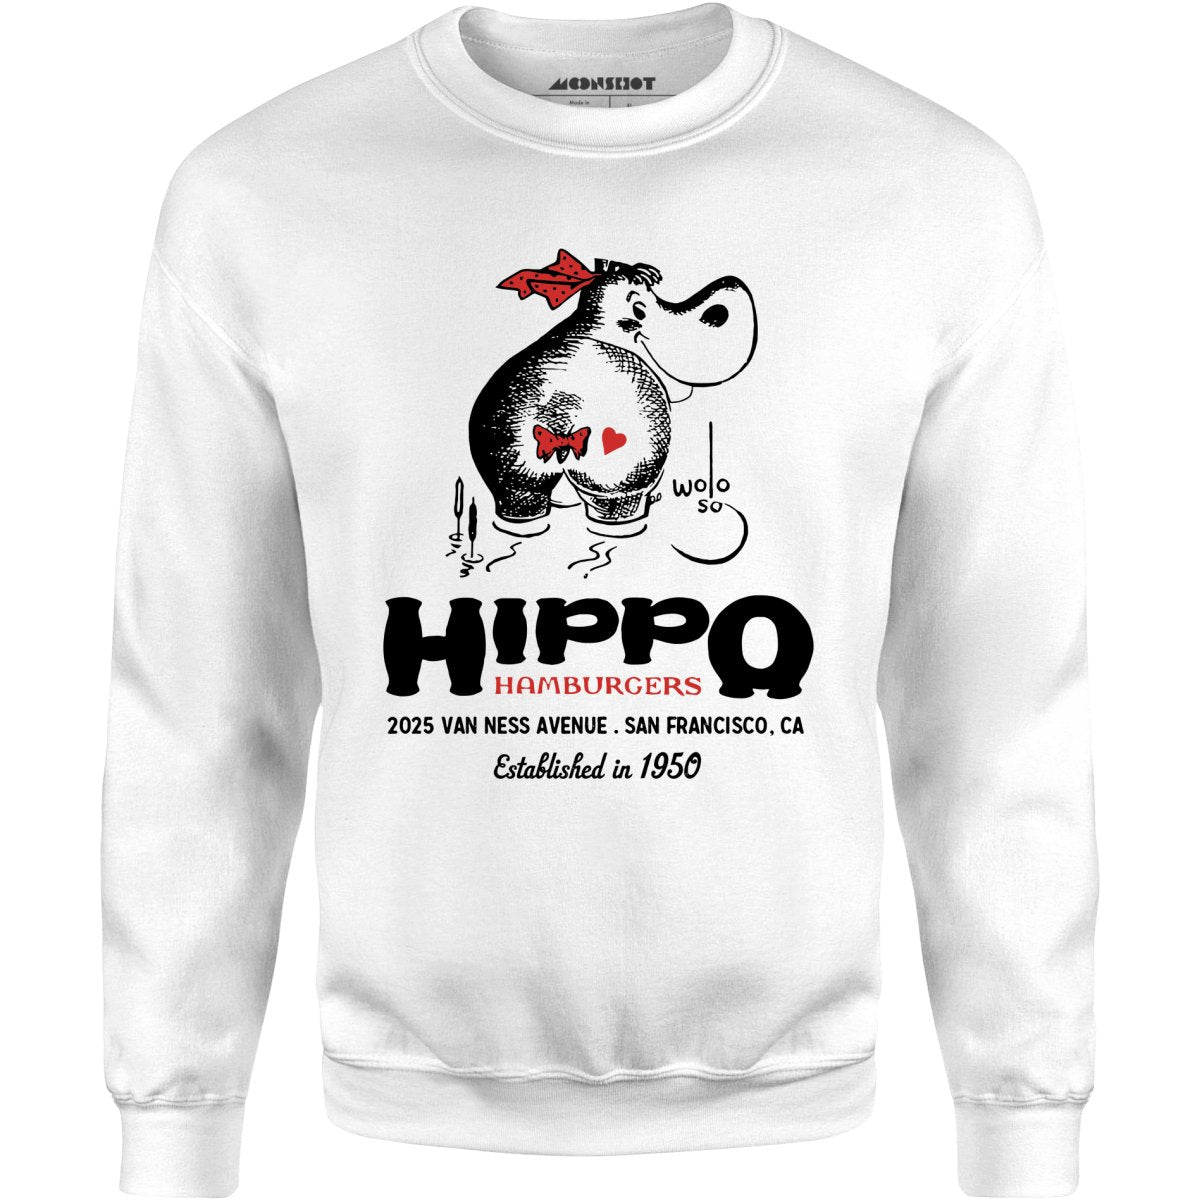 Hippo Hamburgers - San Francisco, CA - Vintage Restaurant - Unisex Sweatshirt